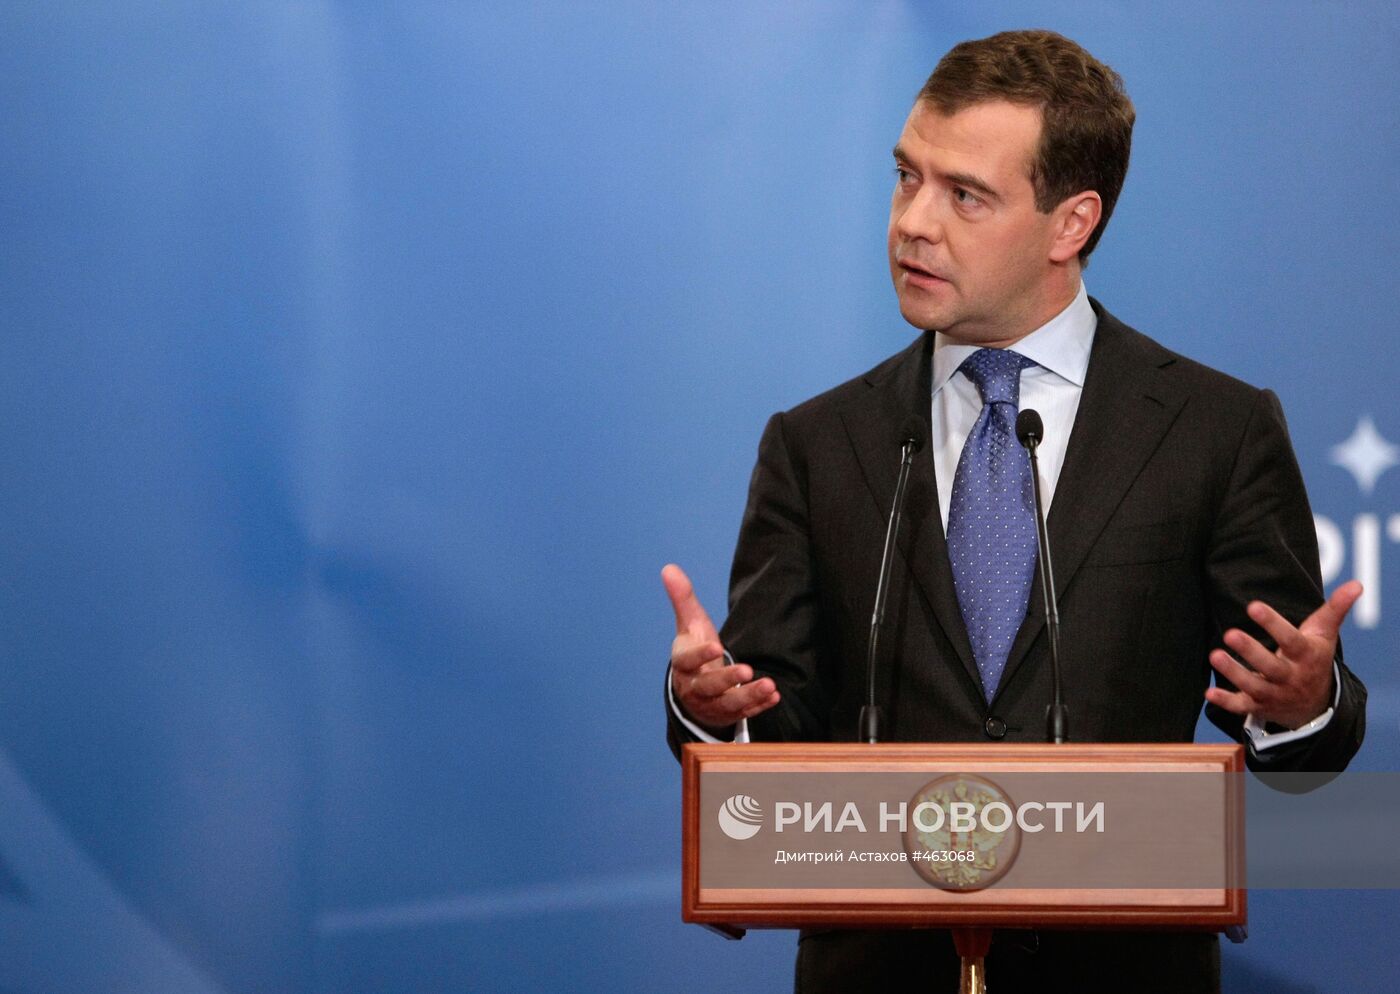 Пресс-конференция президента РФ Д.Медведева в Питтсбурге